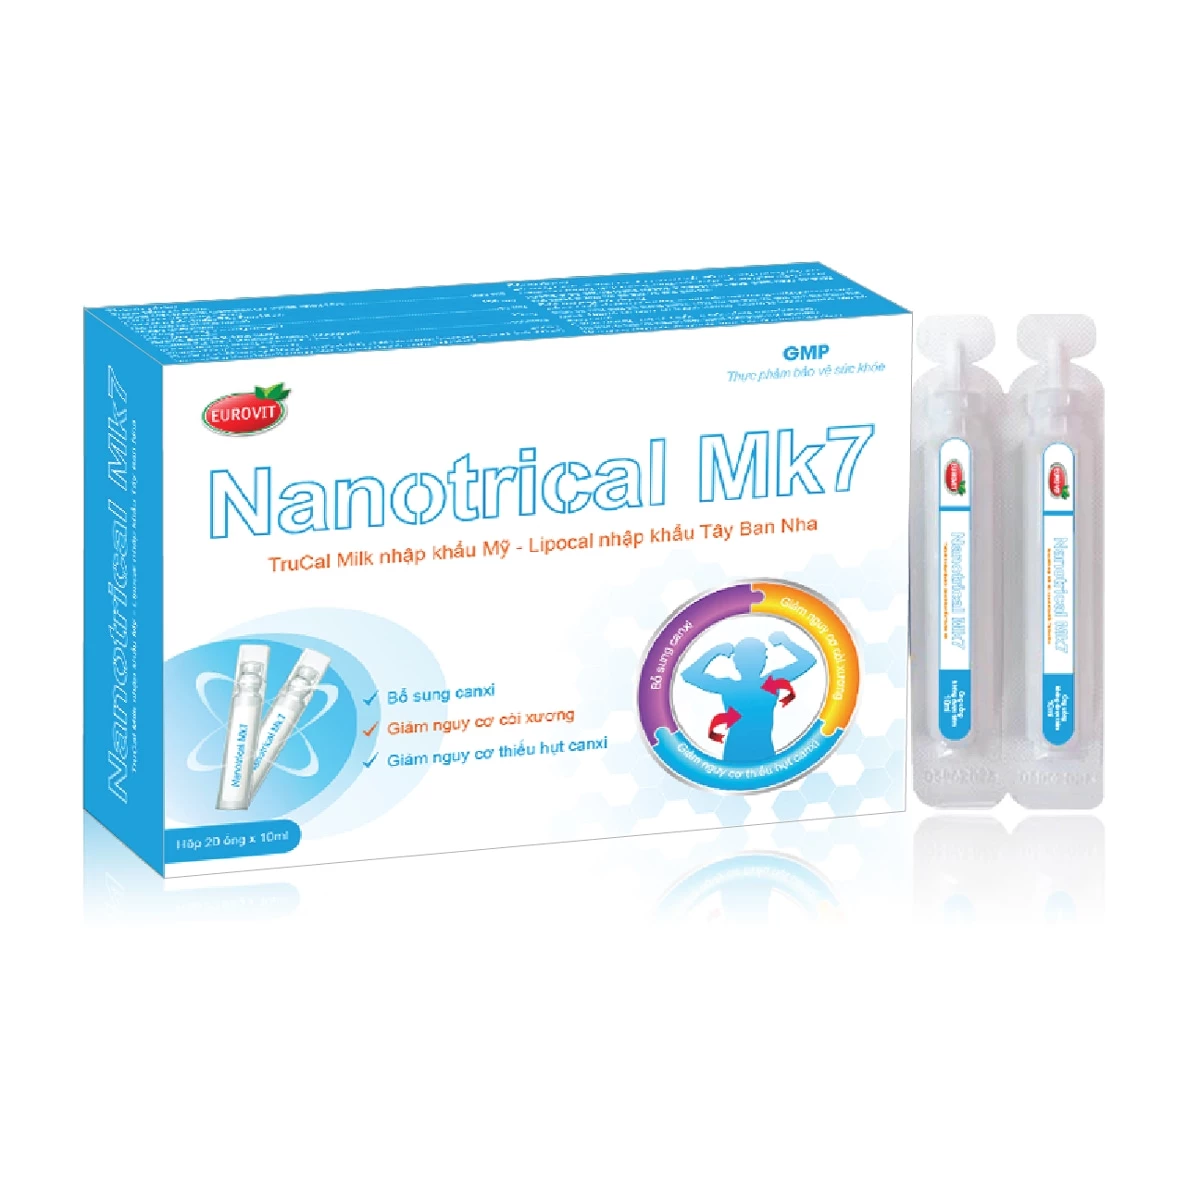 Nanotrical Mk7 Eurovit - Bổ sung canxi sữa & canxi sinh học cho bé